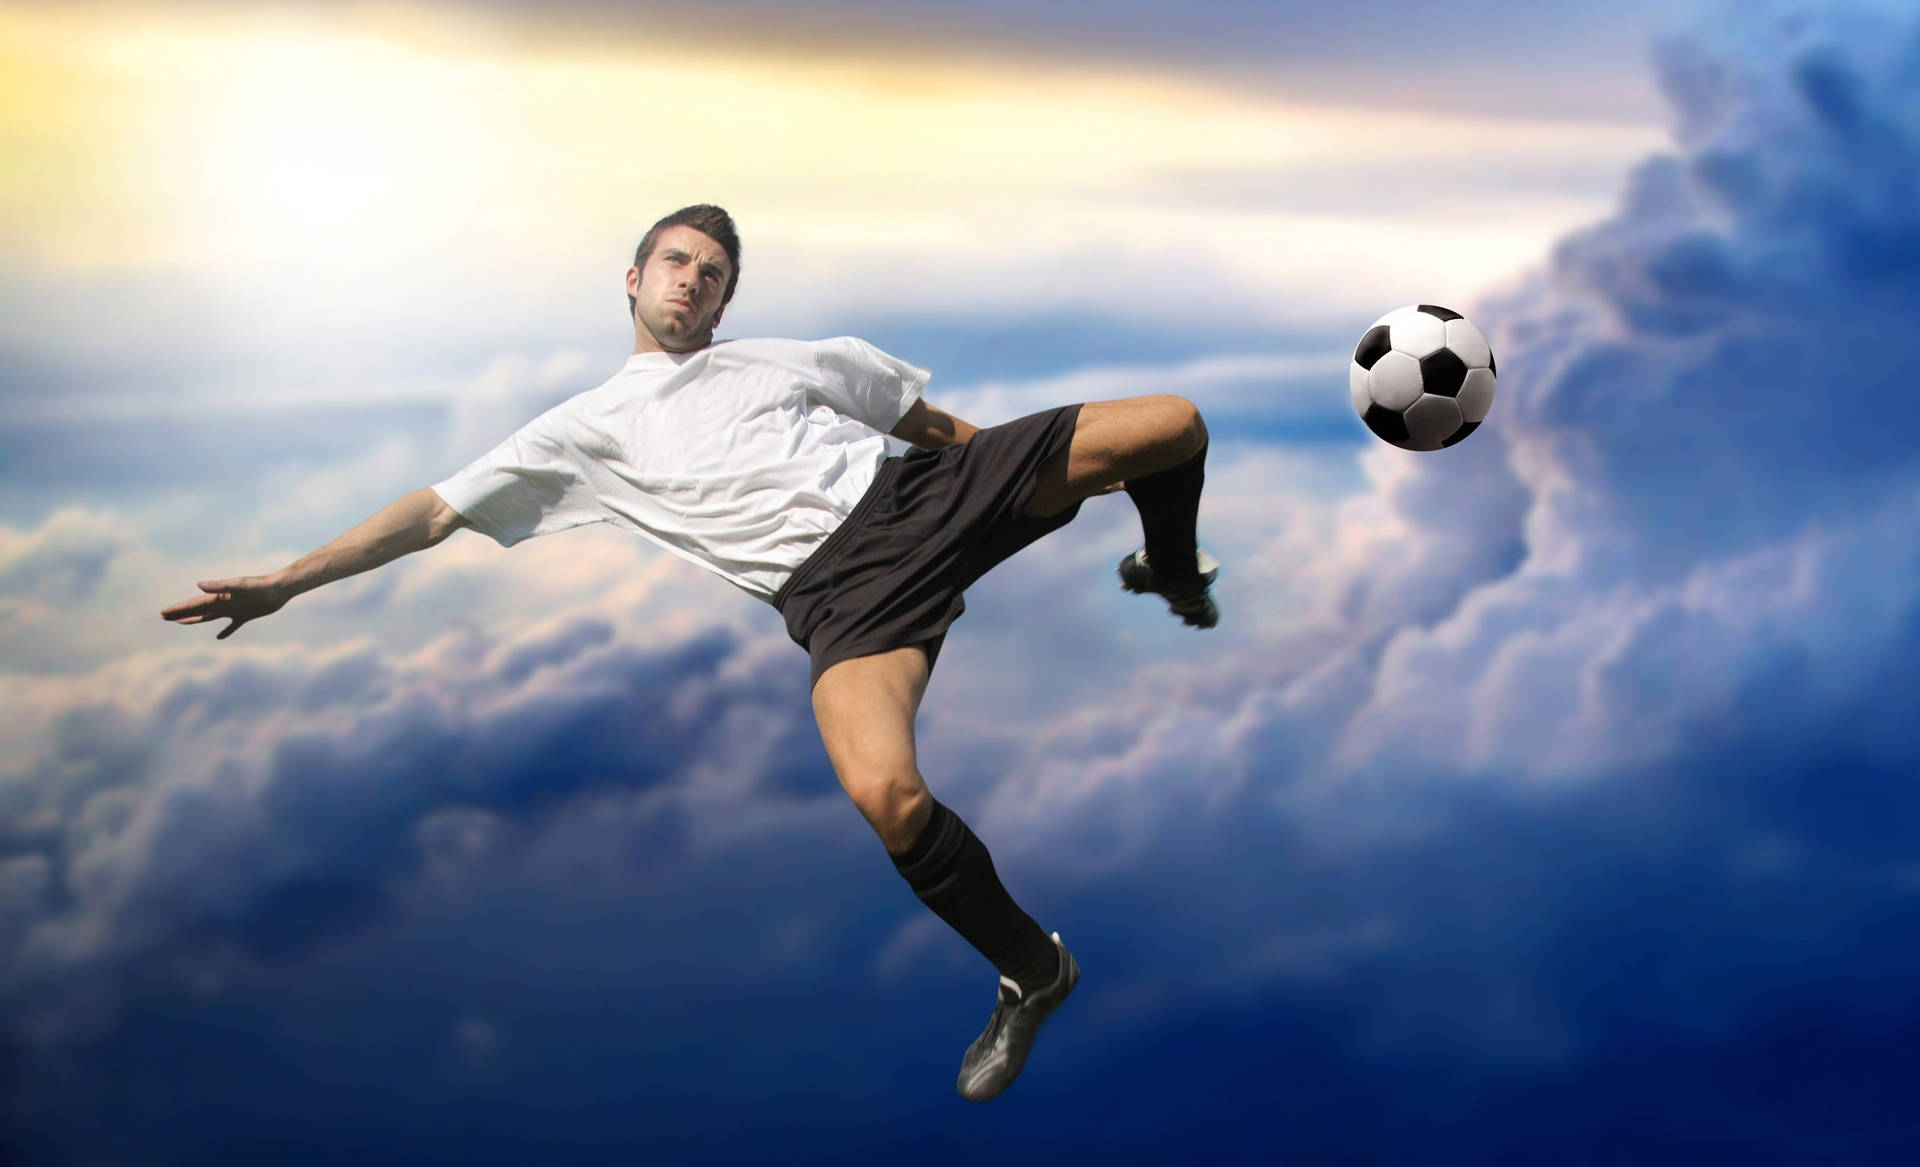 Cool Soccer Kick Illustration Wallpaper